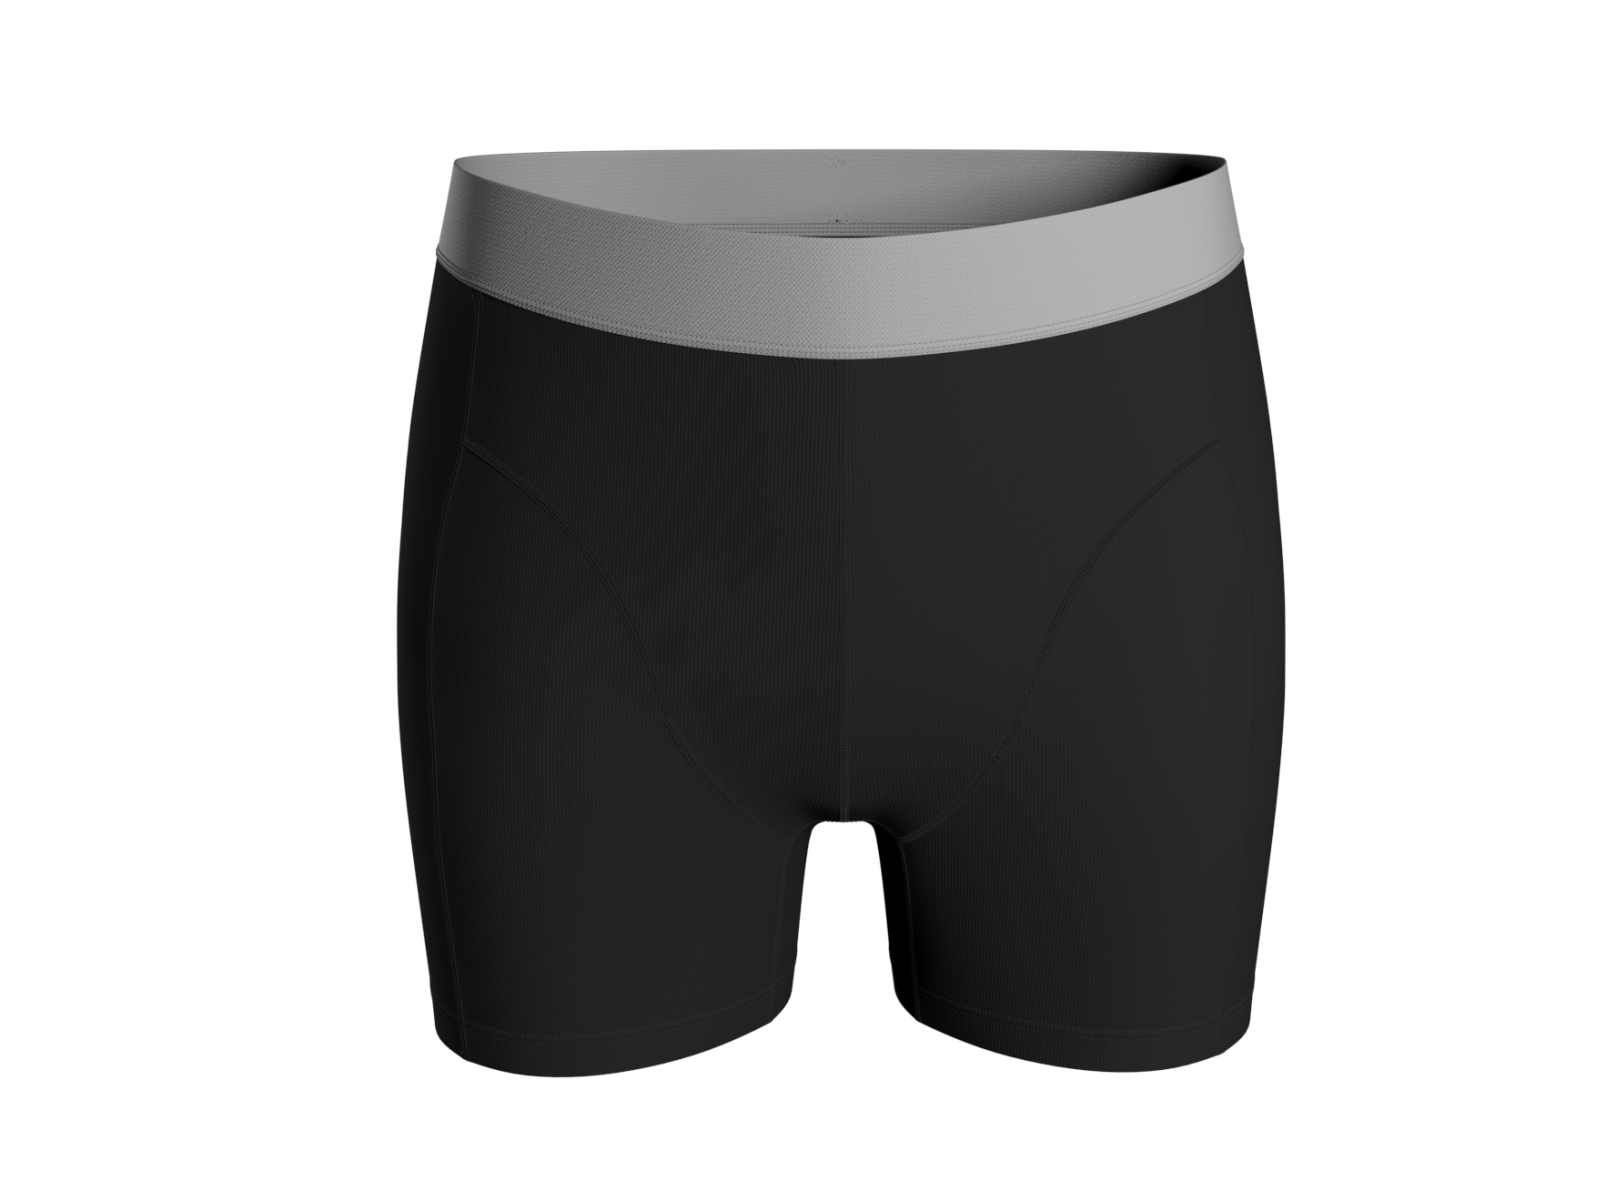 3D Garments Product Design (Underwear) by mdparvez_3d on Dribbble